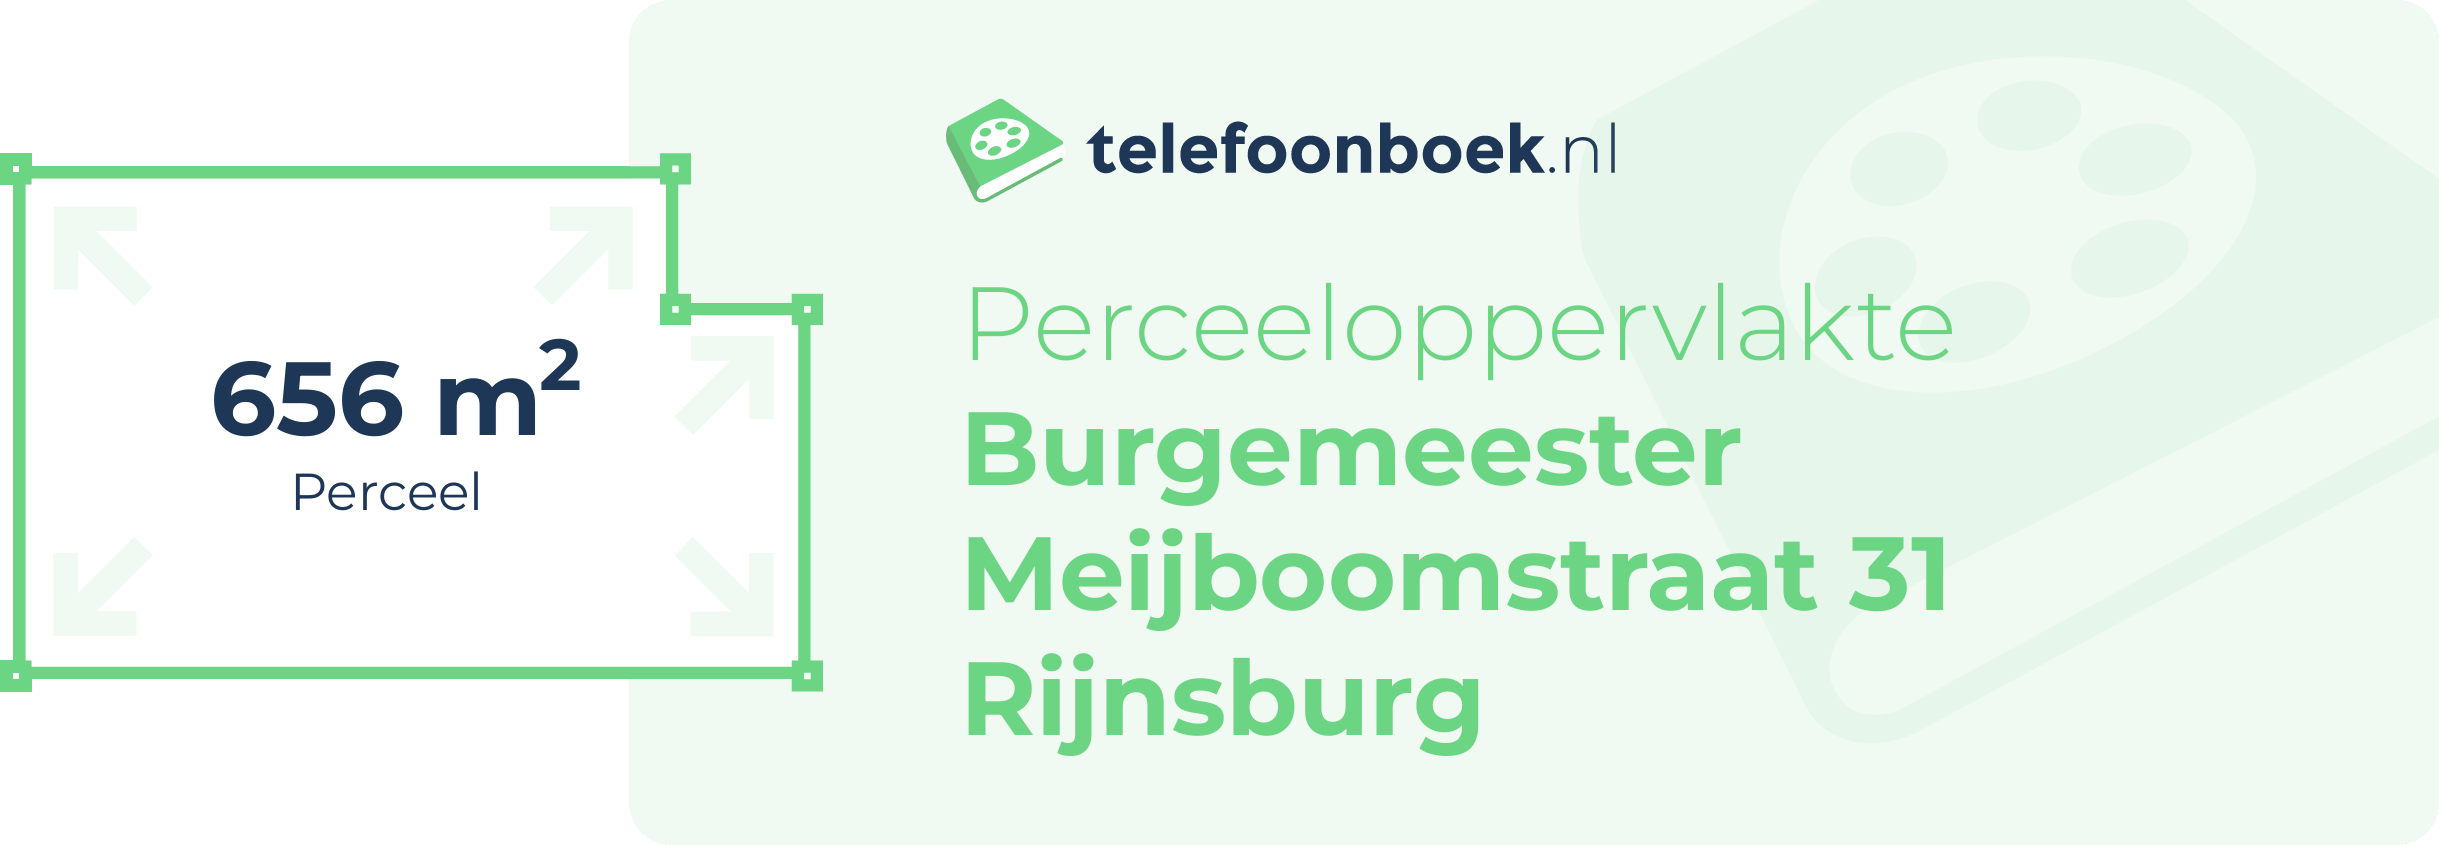 Perceeloppervlakte Burgemeester Meijboomstraat 31 Rijnsburg